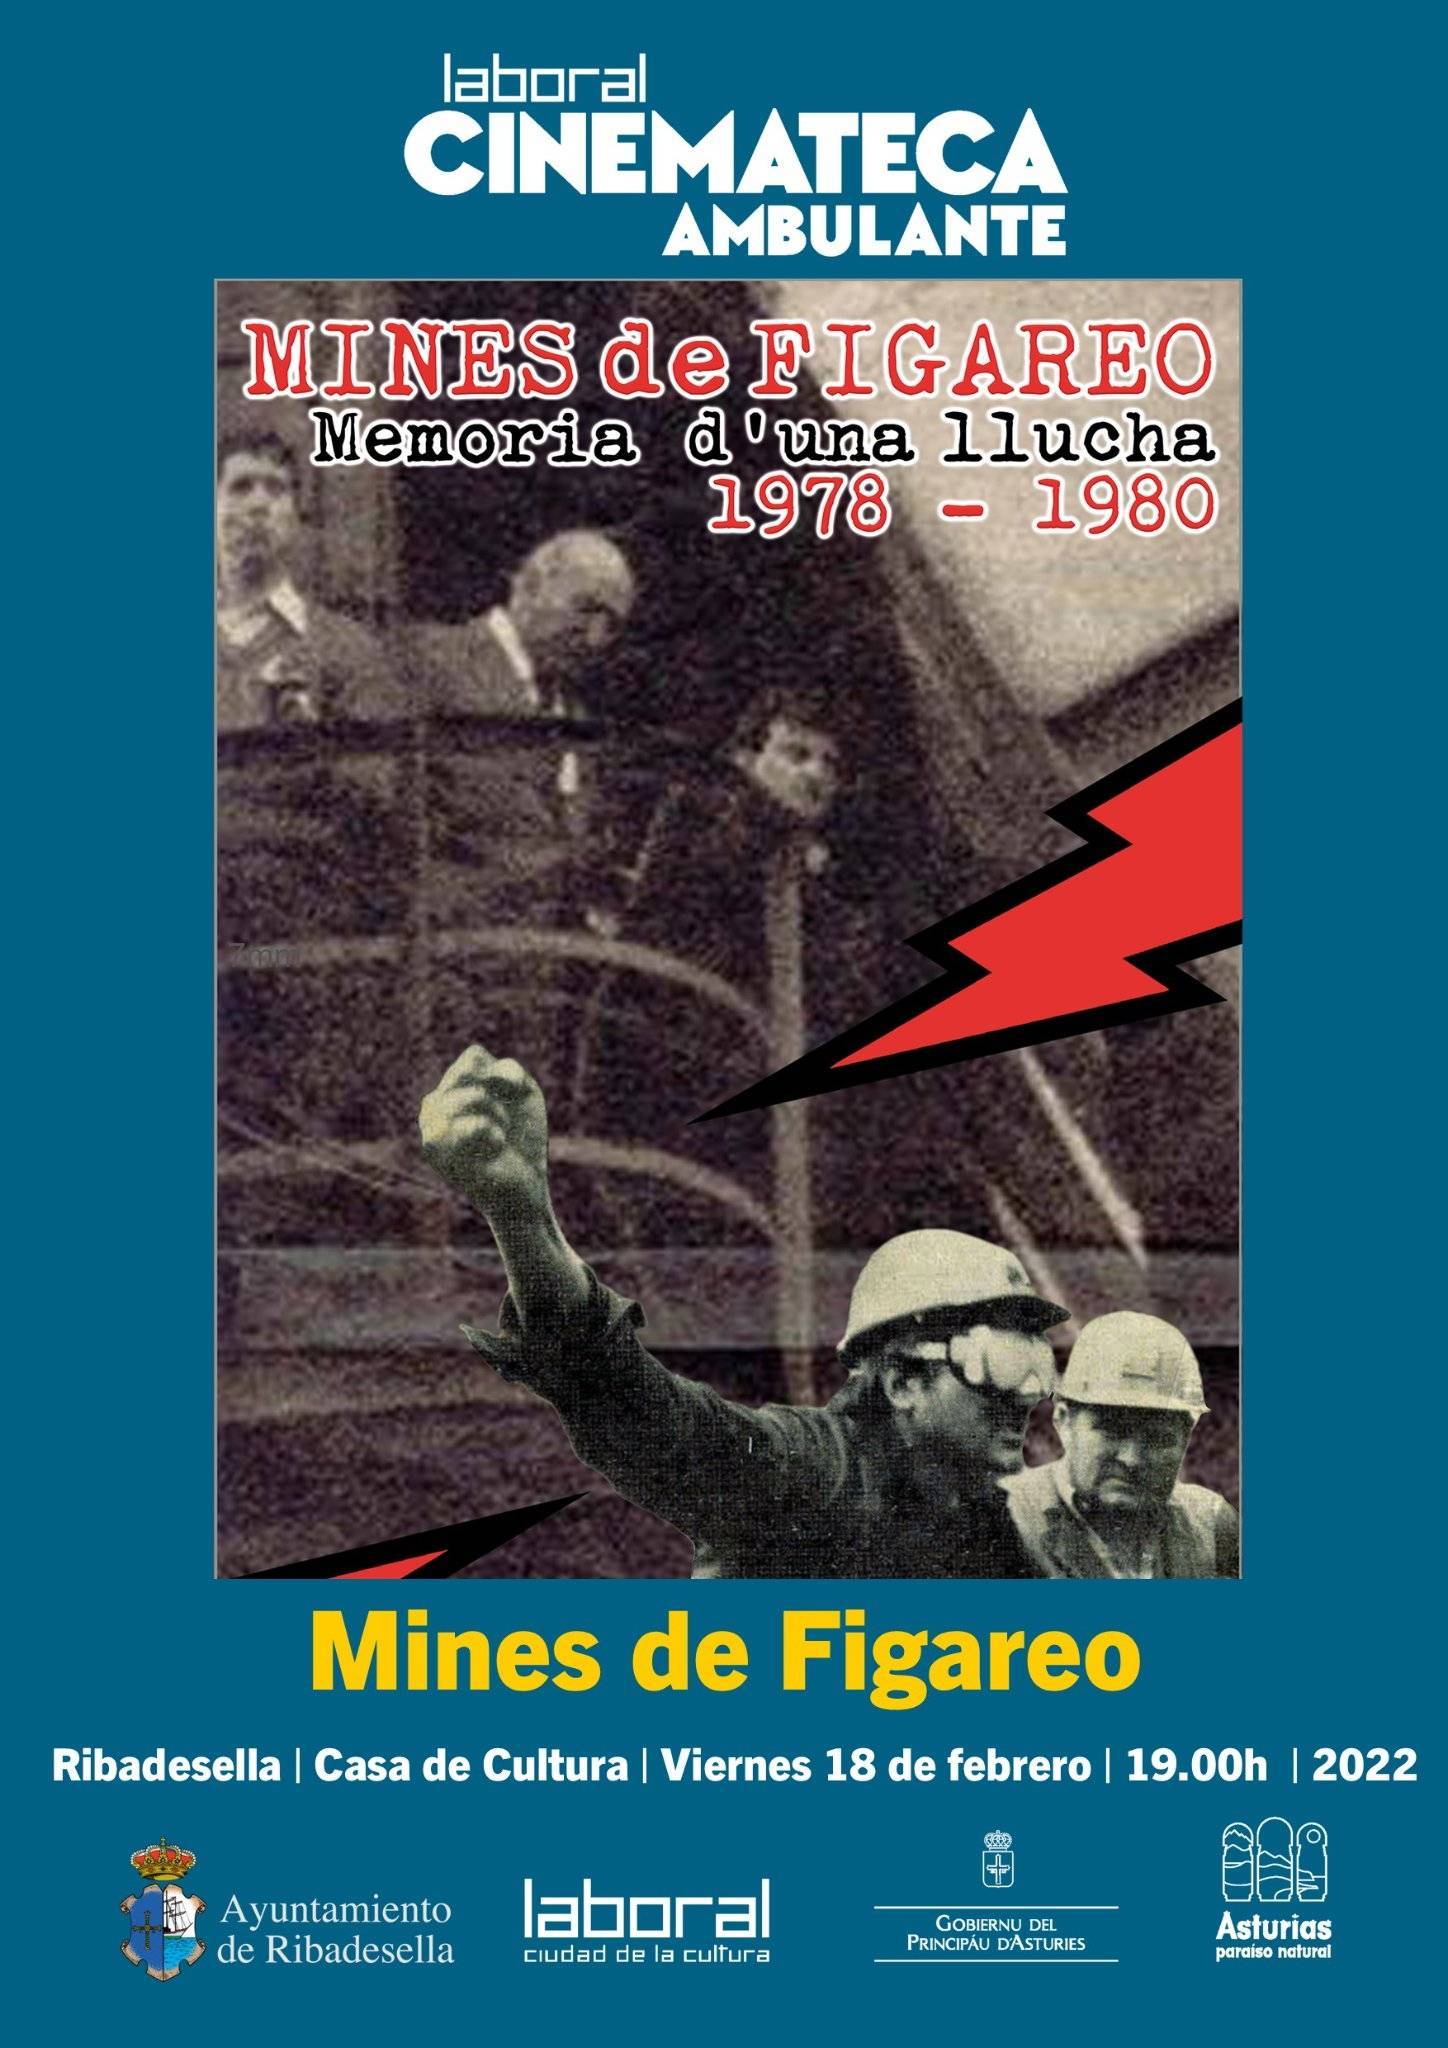 'Mines de Figareo' (2022) - Ribadesella (Asturias)